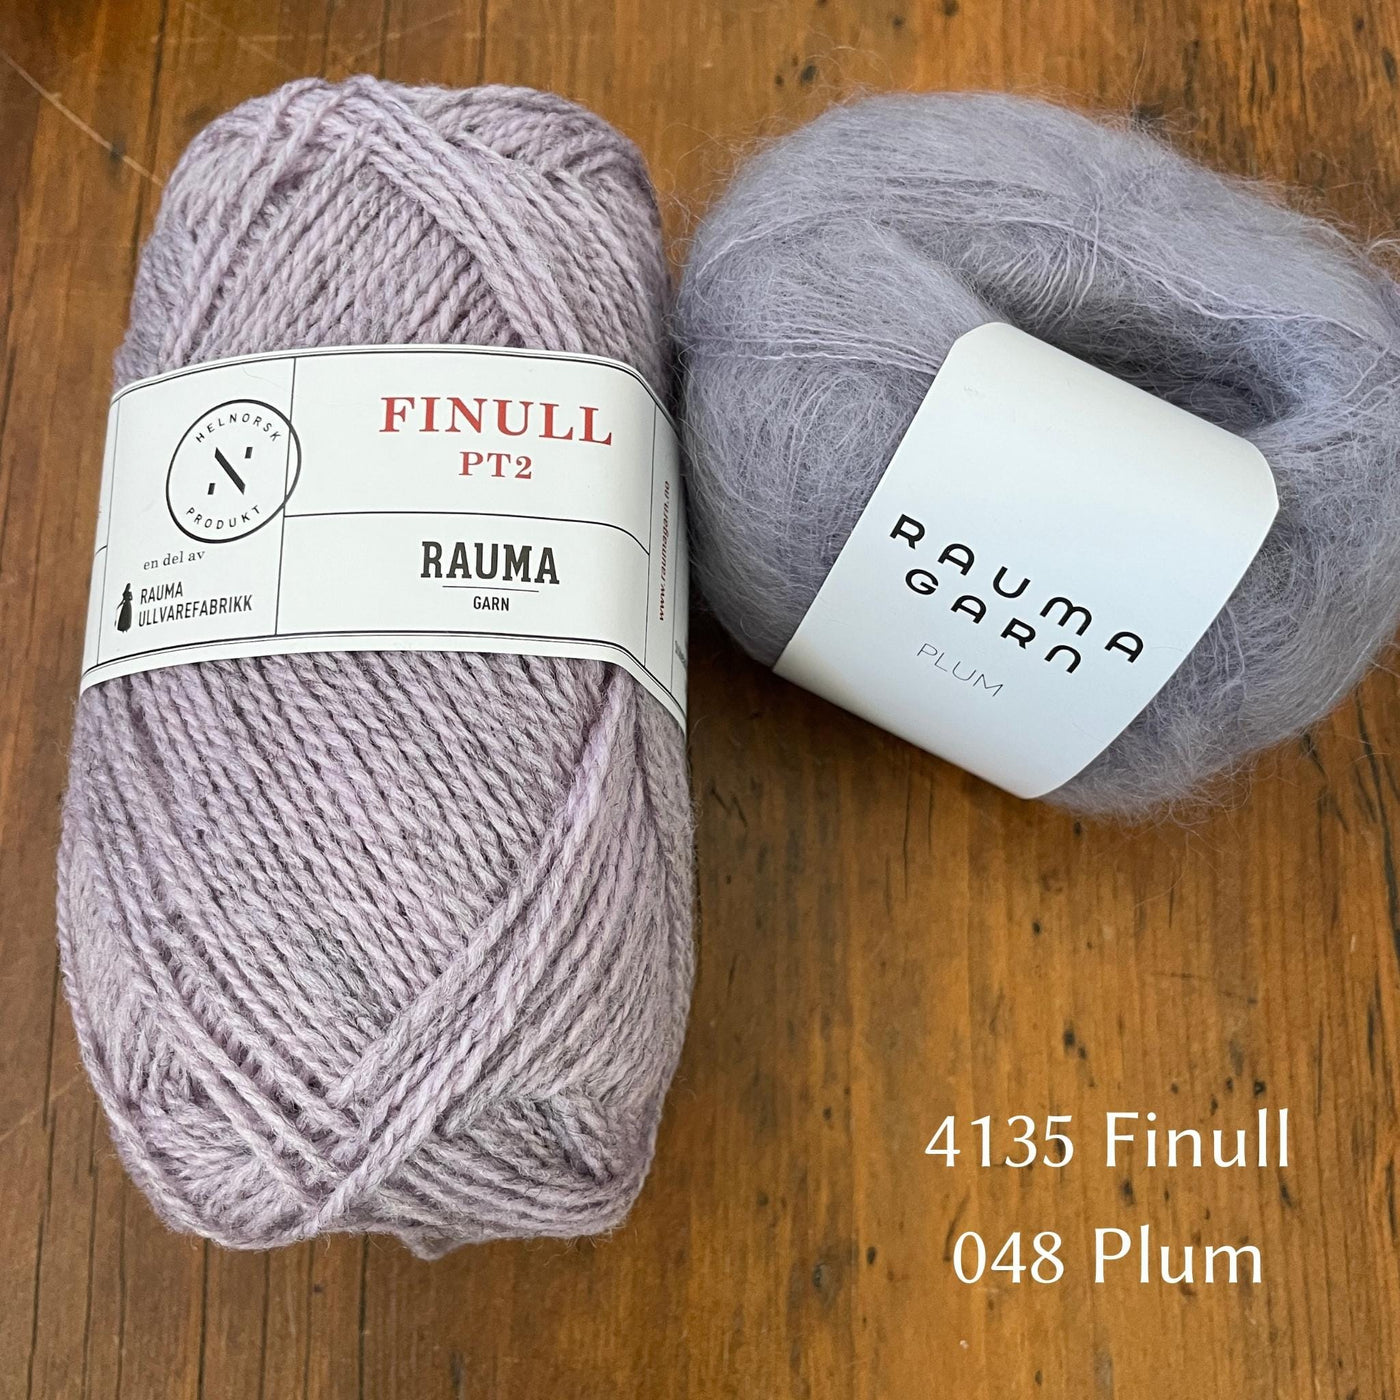 Ball of Rauma Finullgarn yarn in heathered lgiht purple with coordinating Plum yarn 